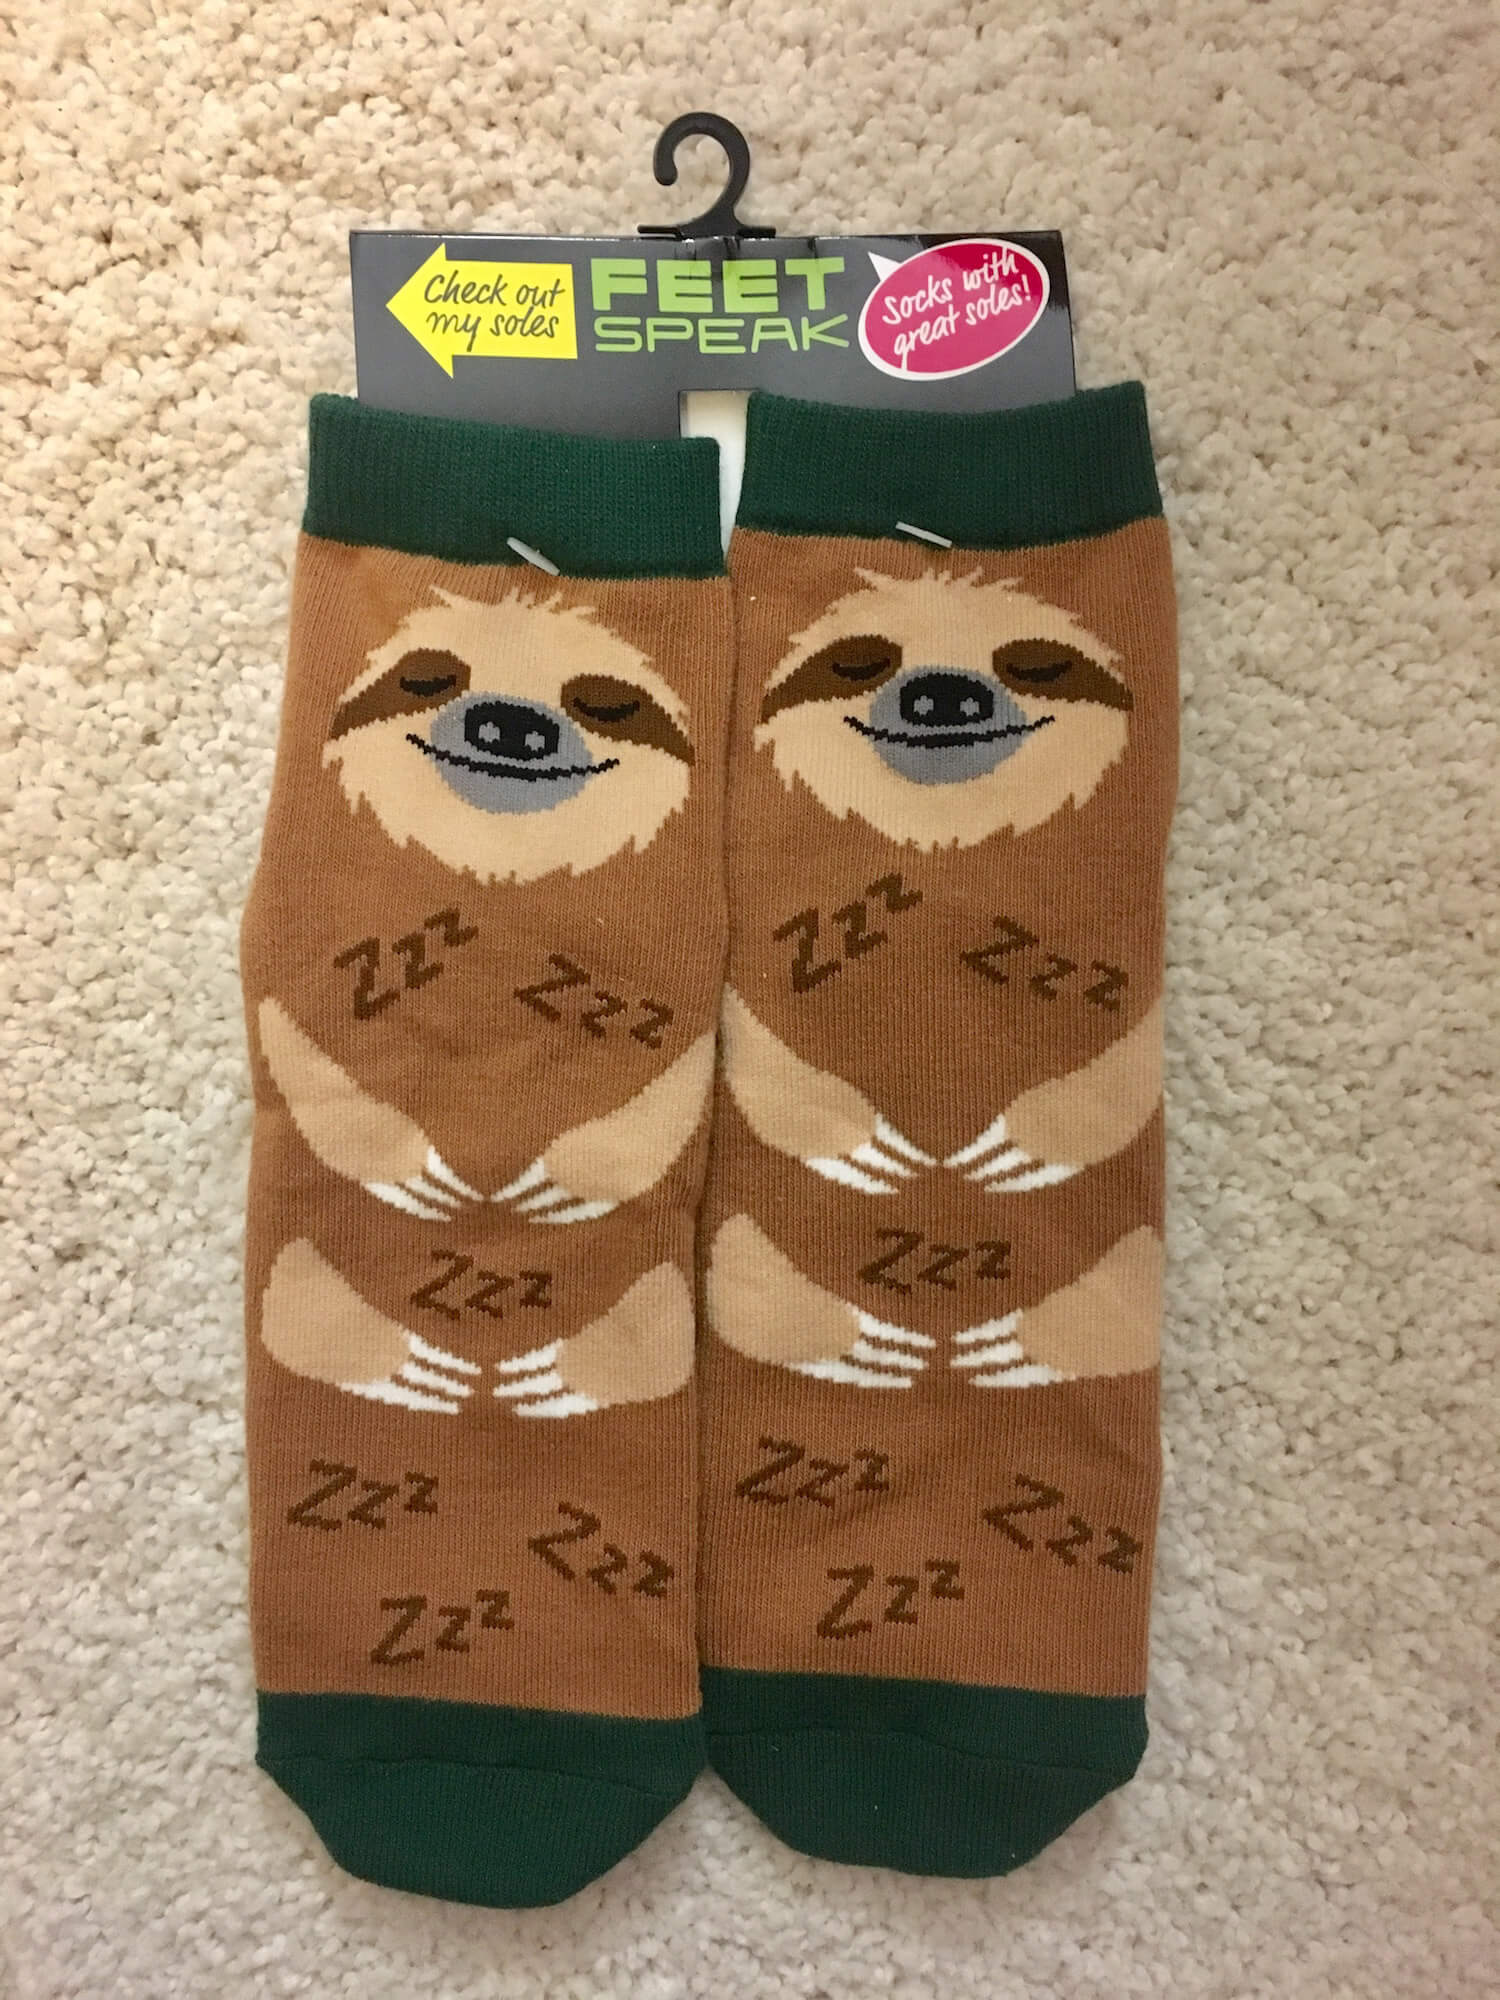 A pair of socks made to look like sleeping sloths